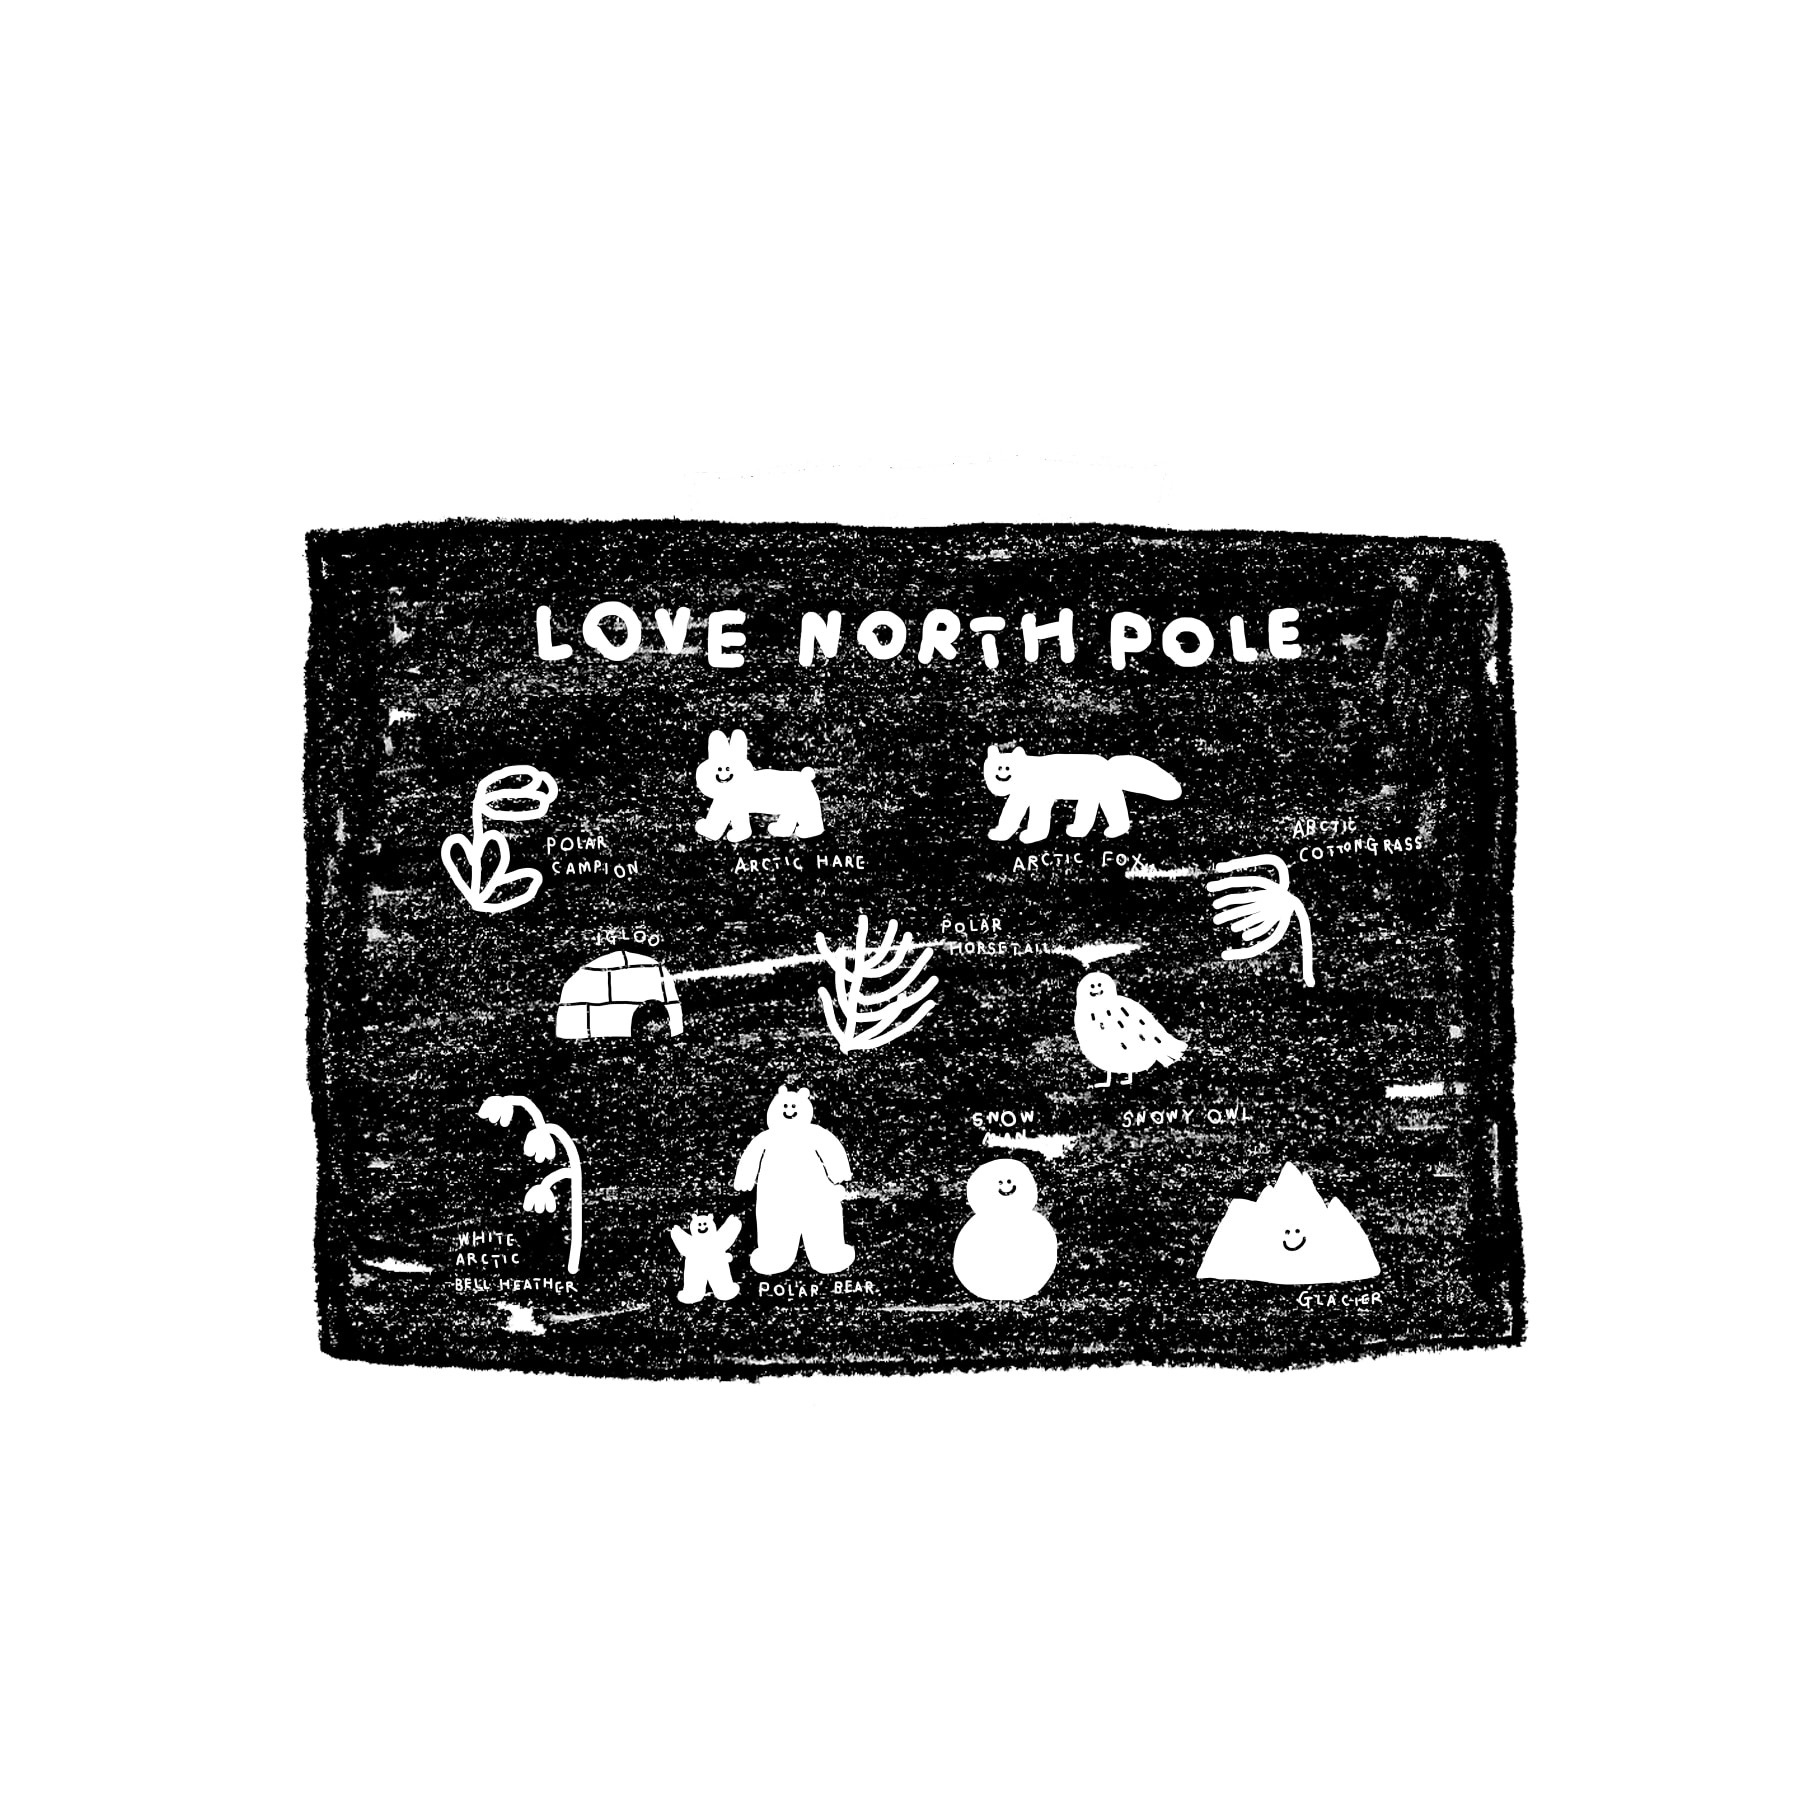 LOVE NORTH POLE FABRIC POSTER